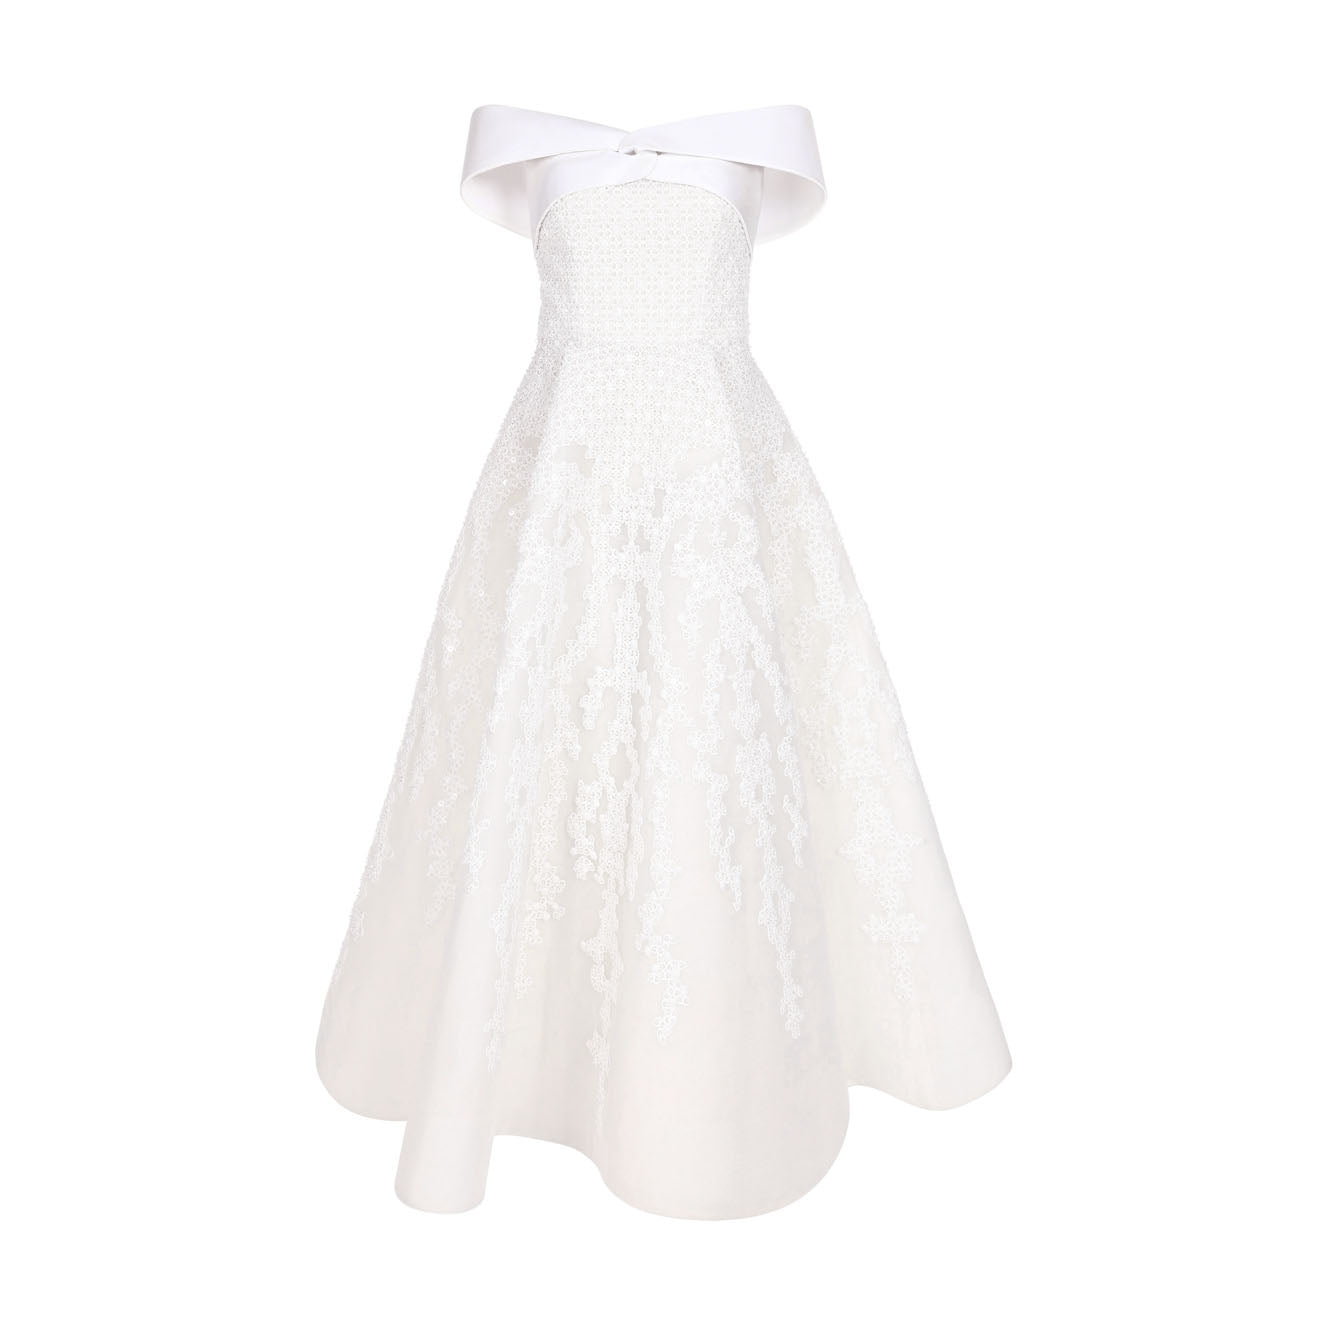 Richly embroidered off-shoulder wedding dress with paneled skirt